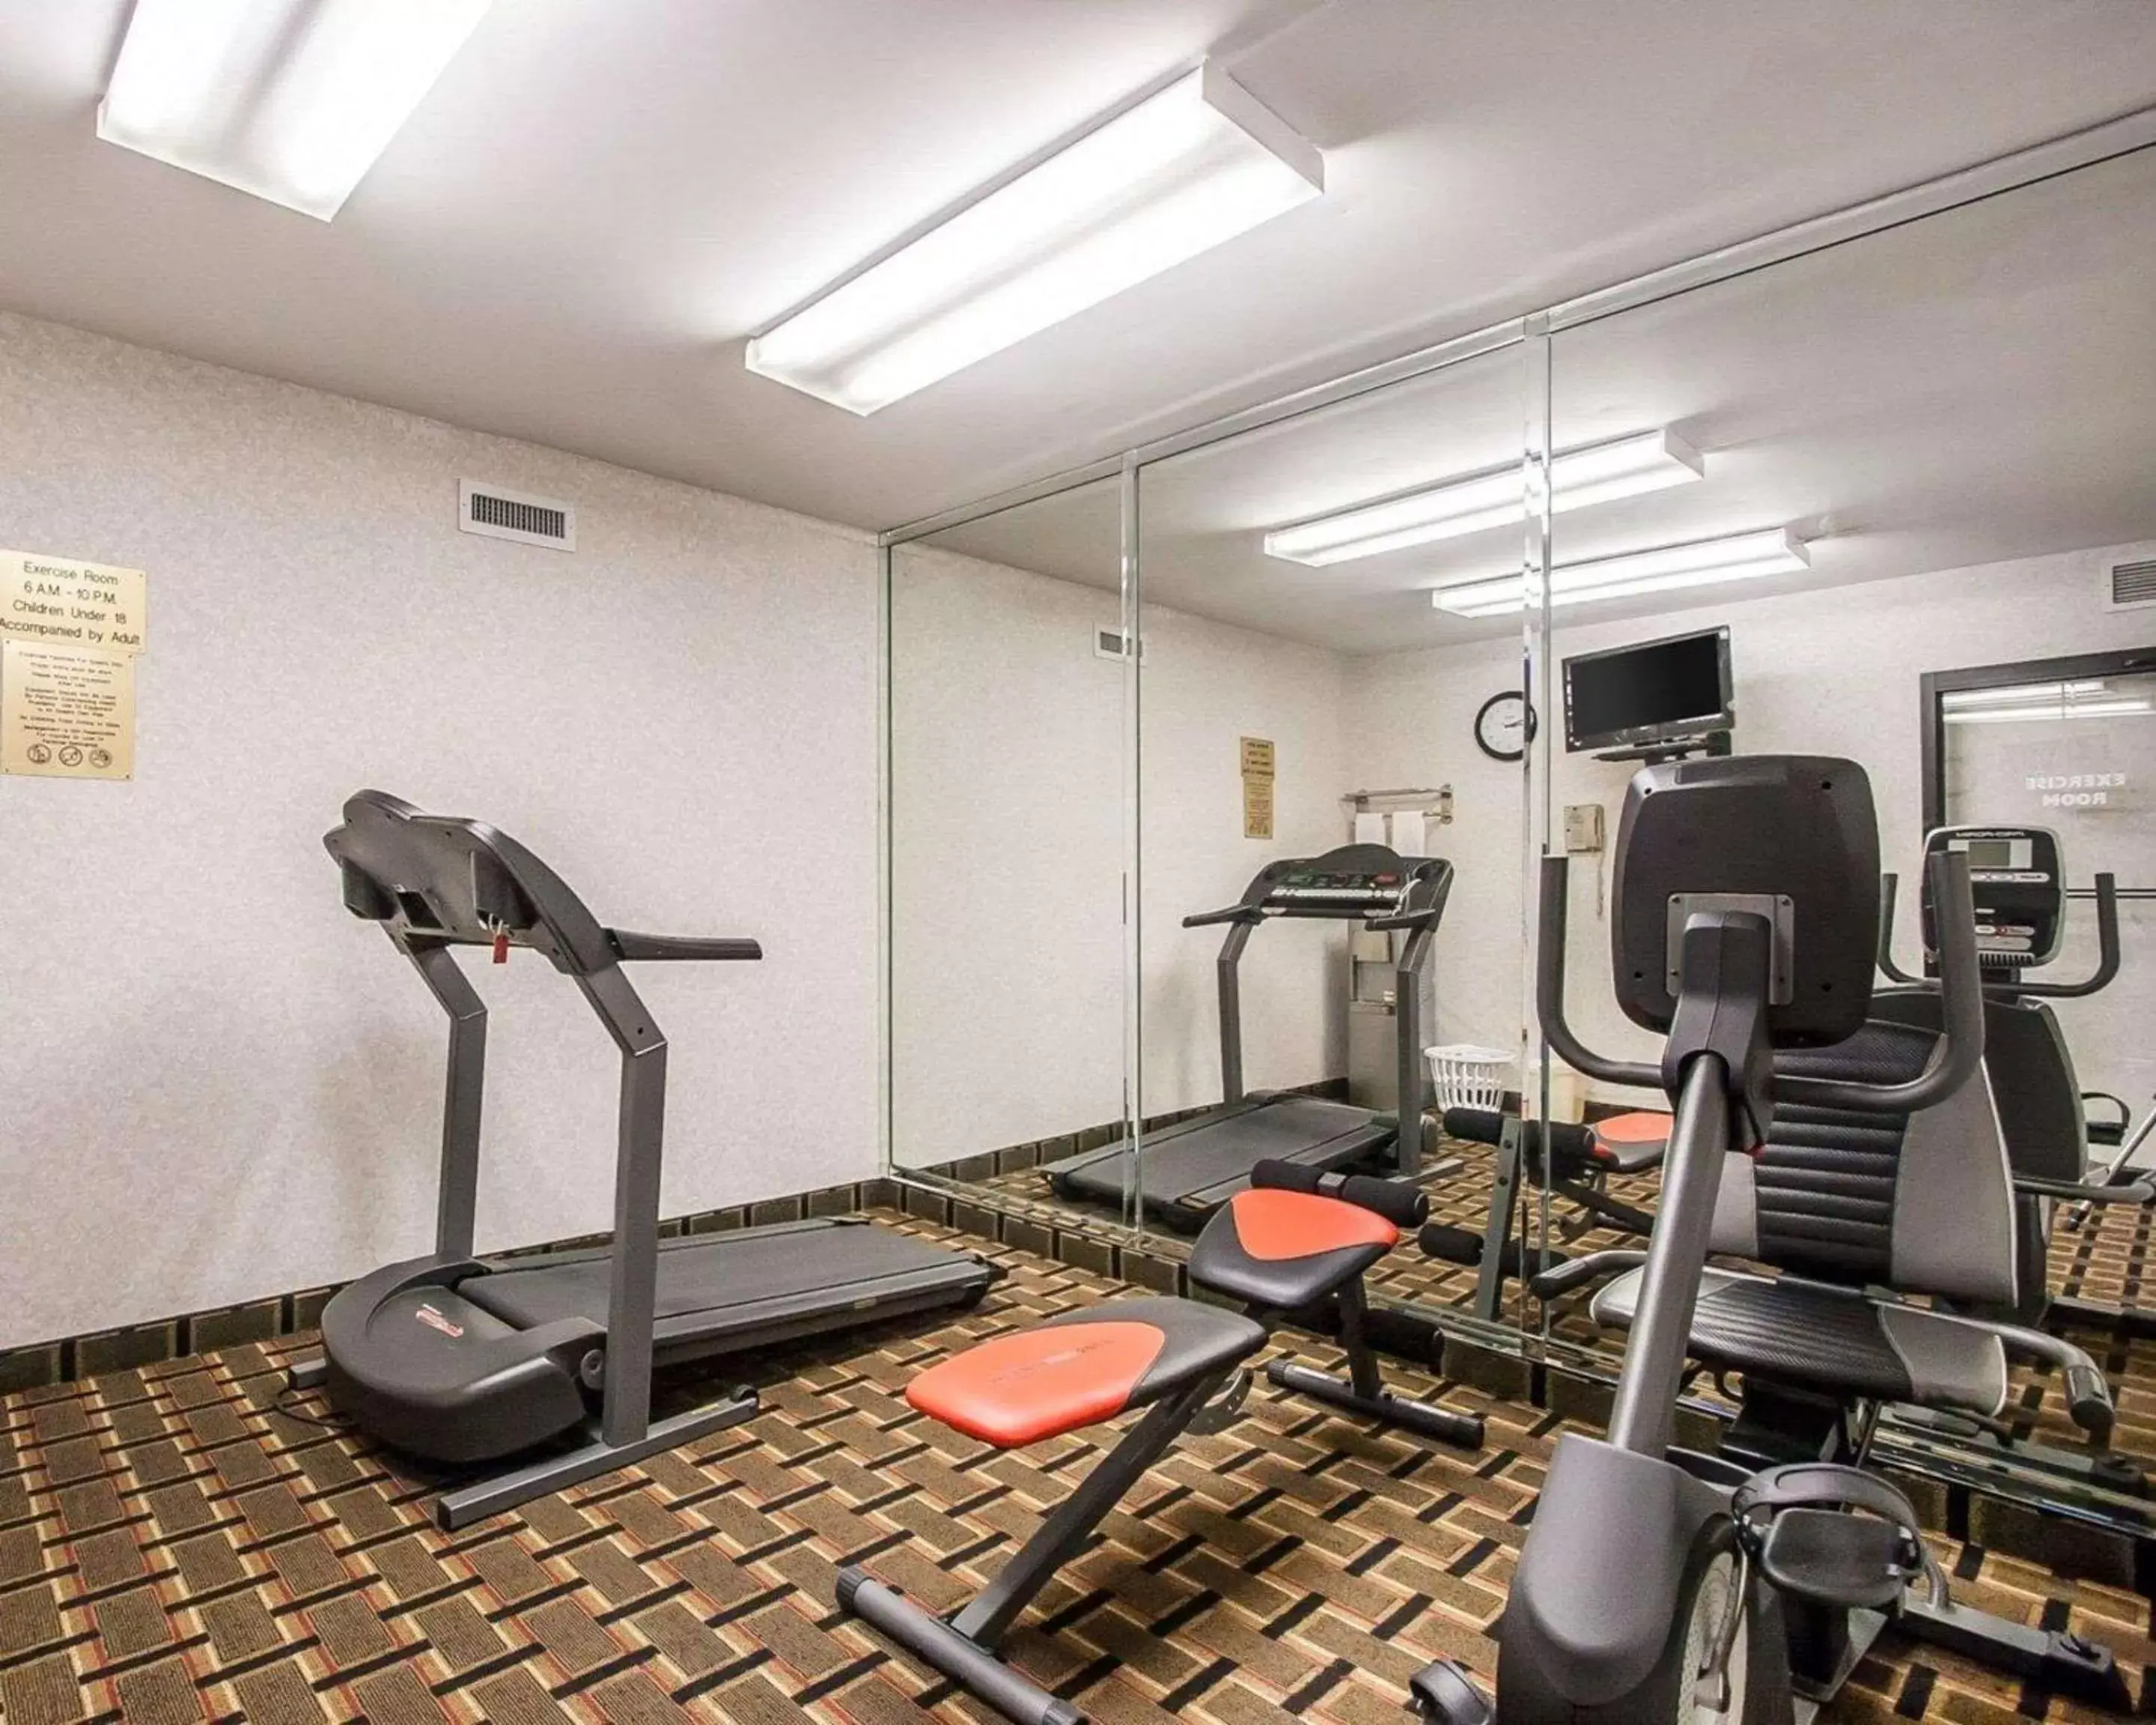 Fitness centre/facilities, Fitness Center/Facilities in Quality Inn Edmund Pettus Bridge Area